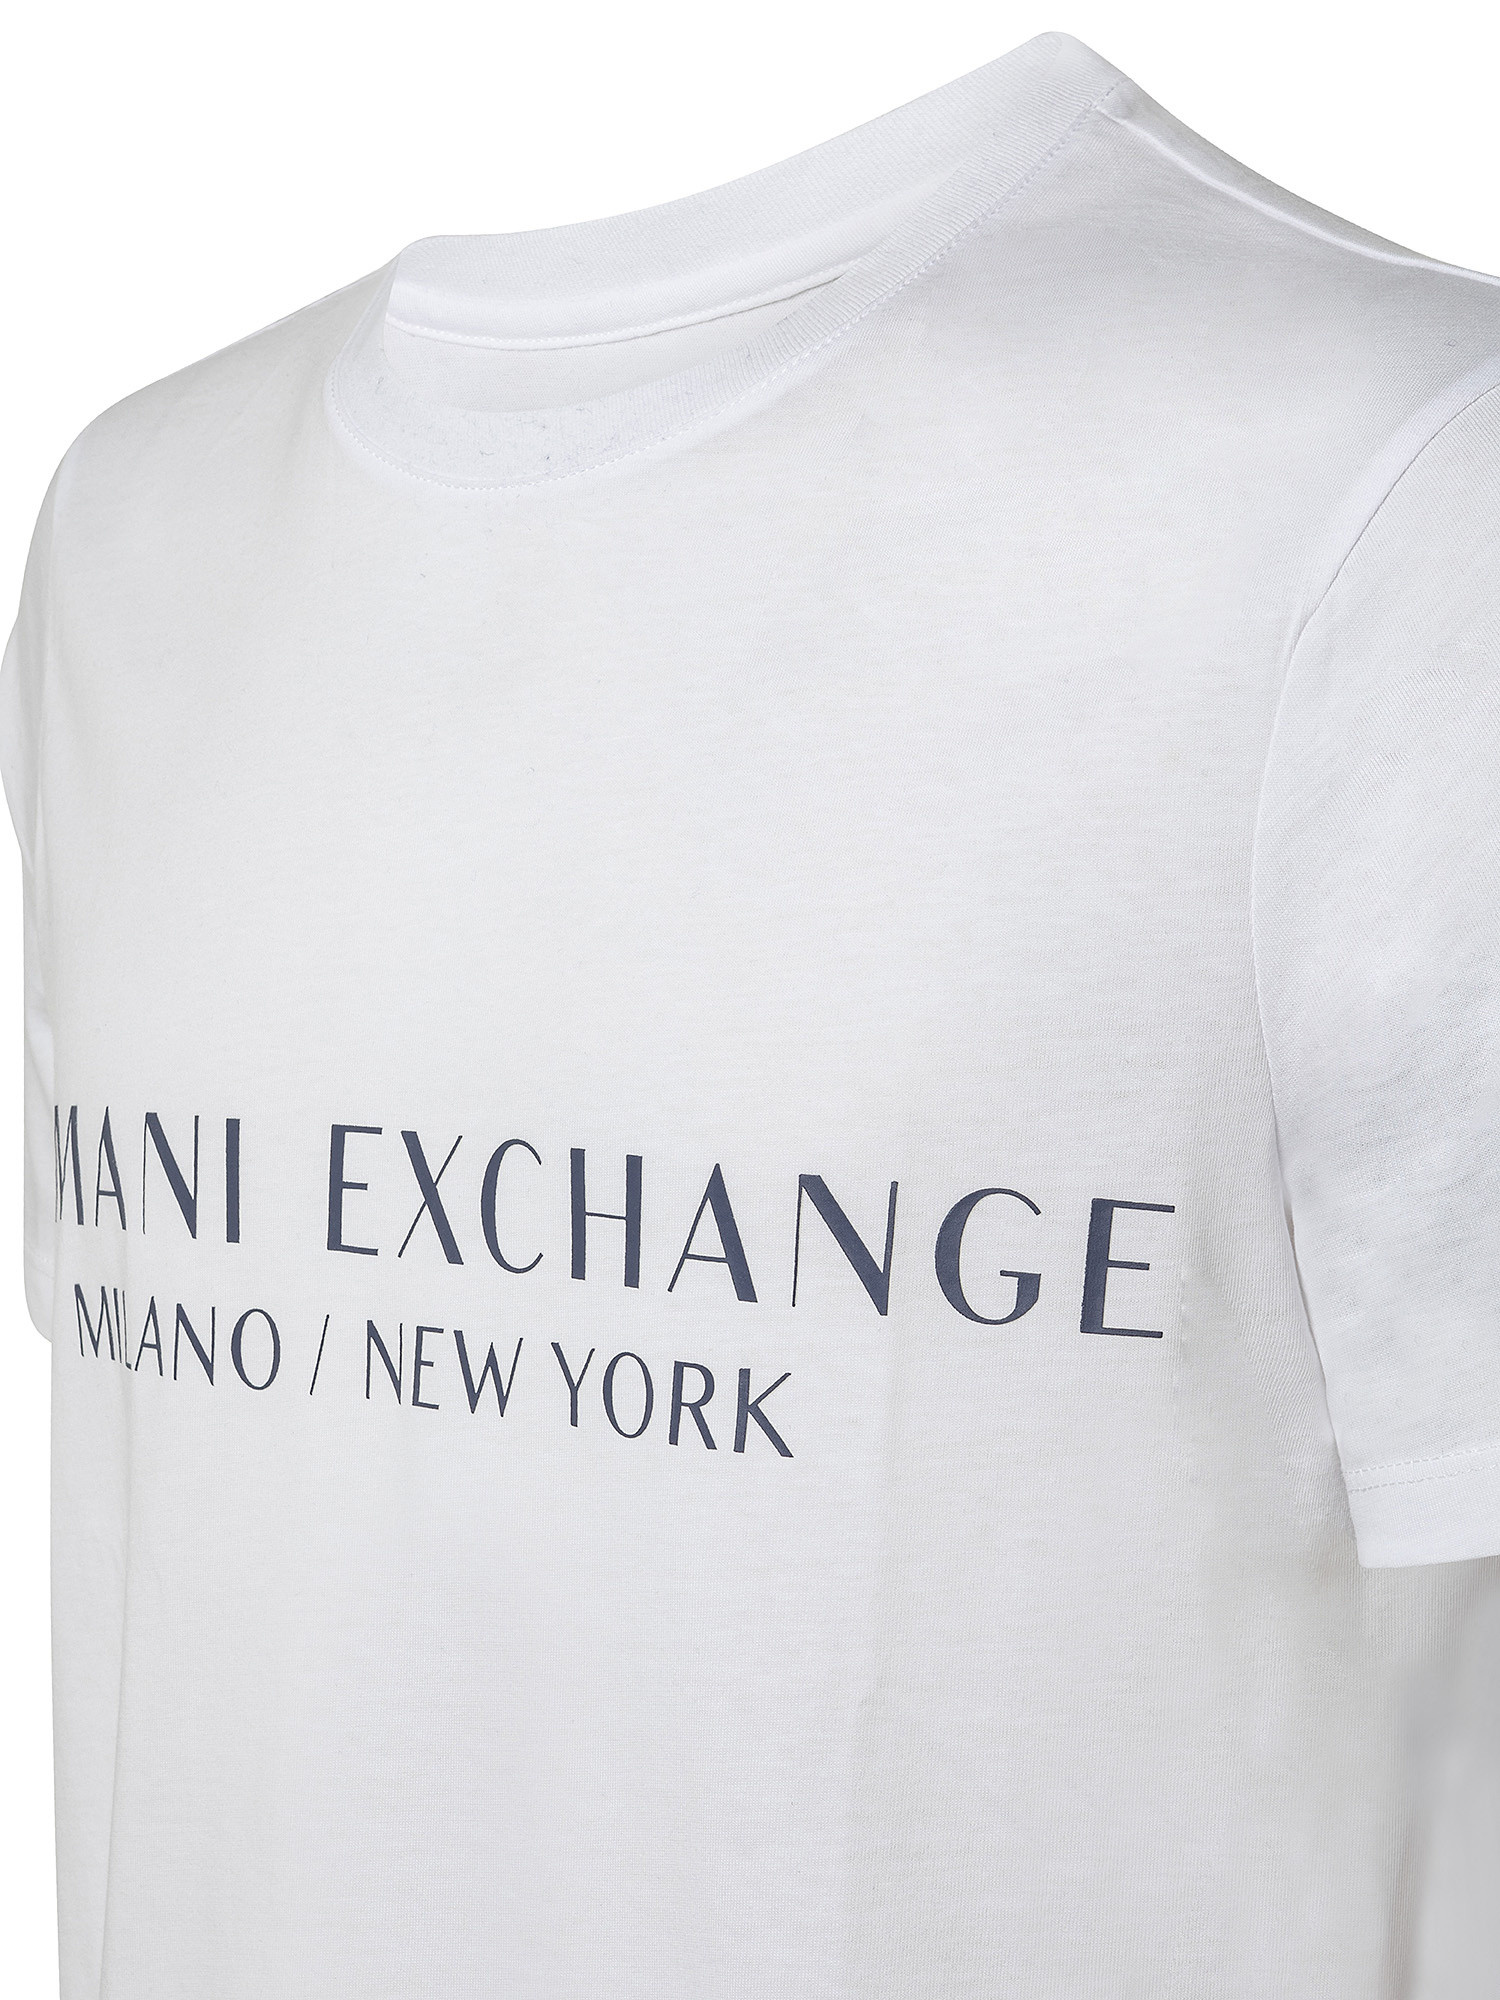 T-shirt, Bianco, large